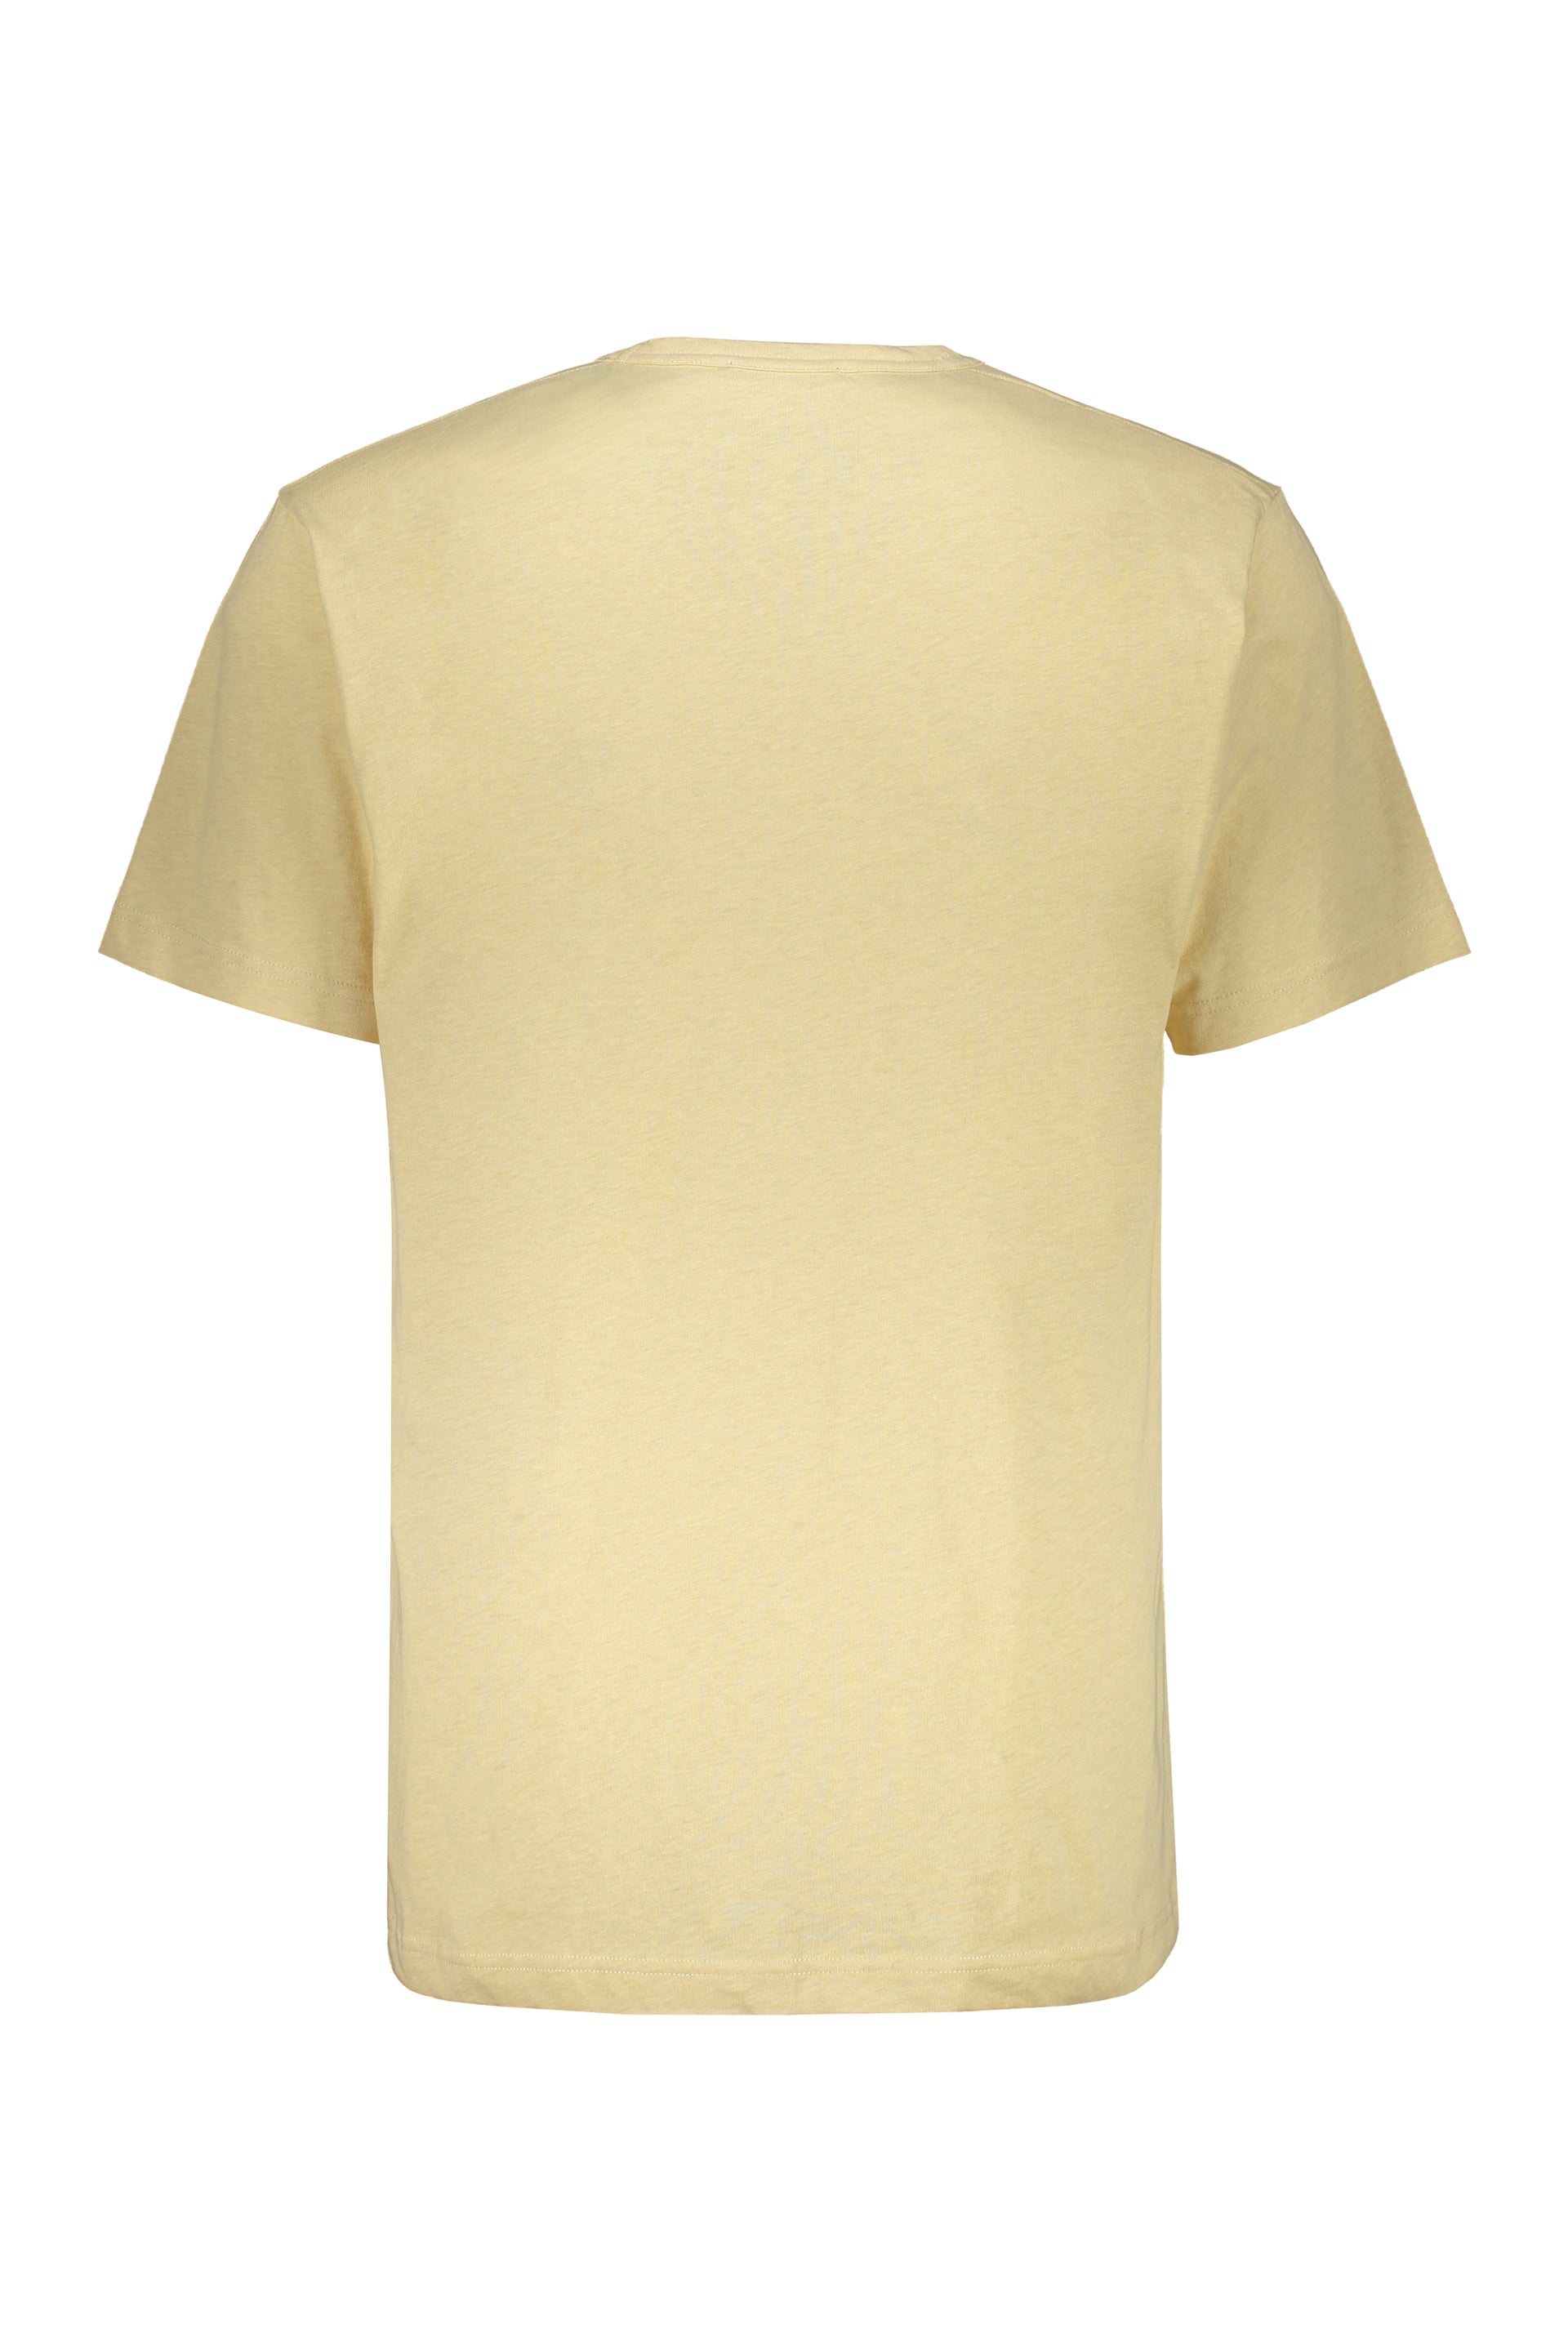 Acne-Studios-OUTLET-SALE-Cotton-T-shirt-Shirts-ARCHIVE-COLLECTION-2.jpg